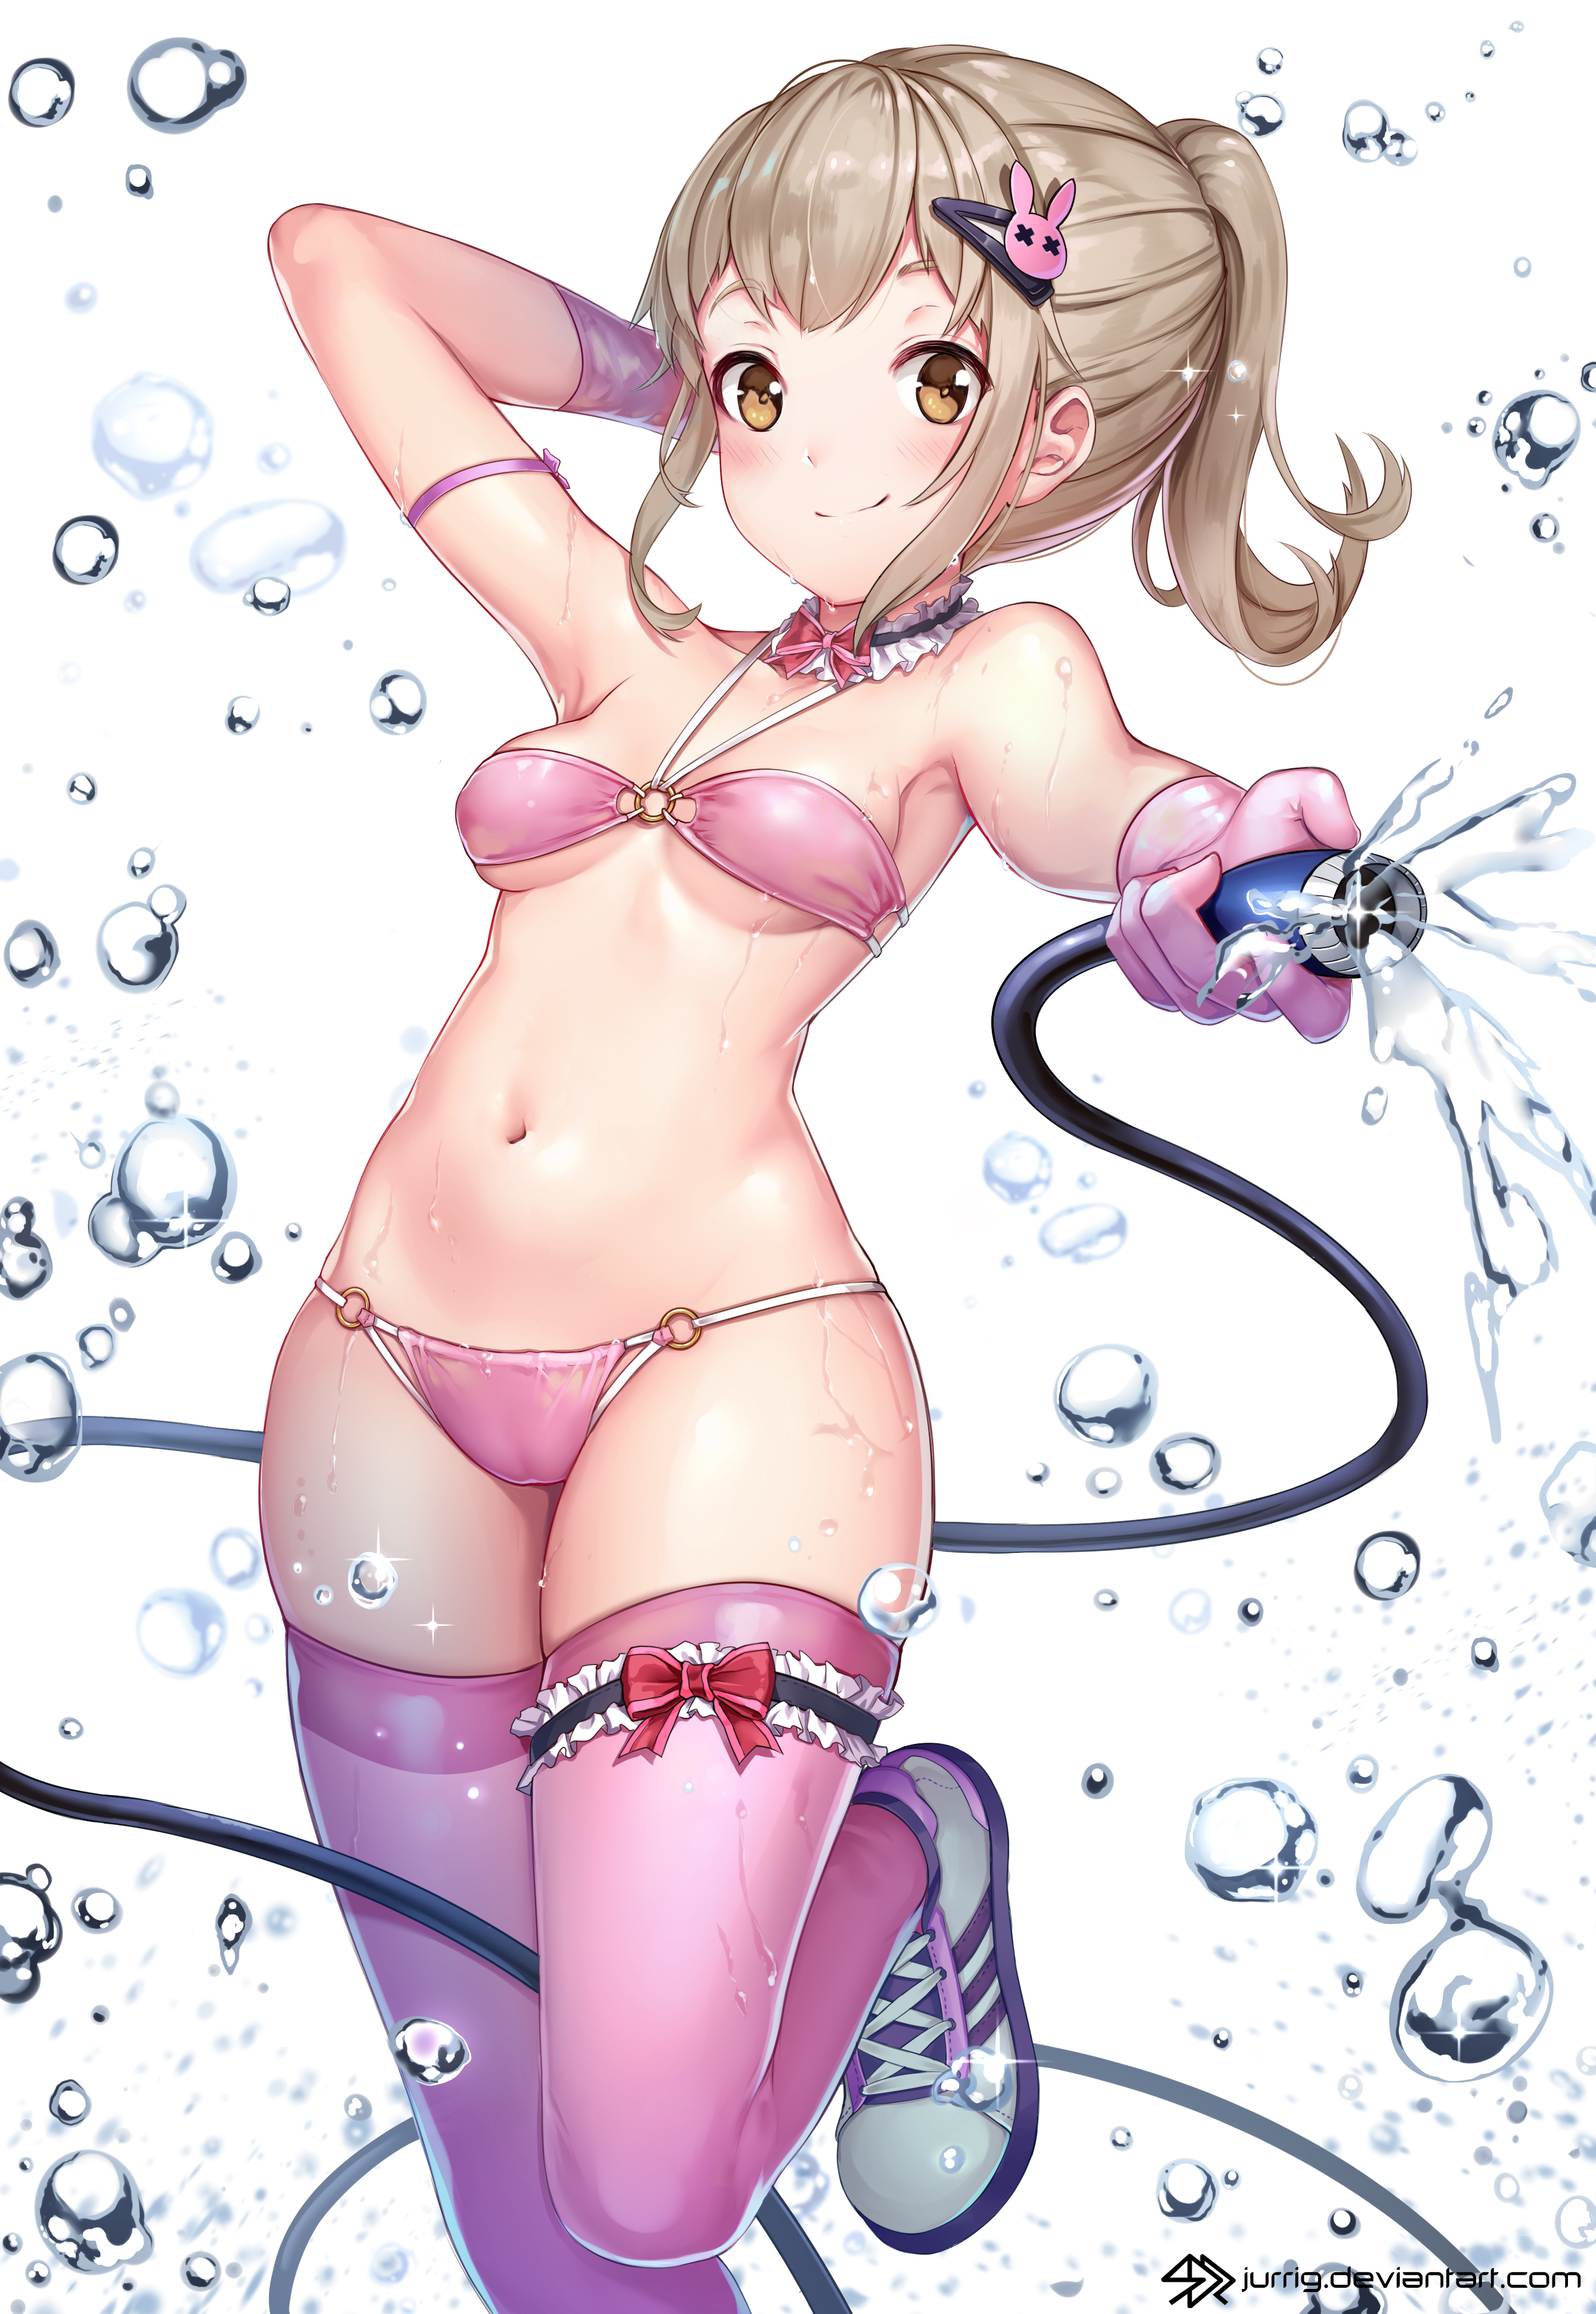 Anime 2676x3880 white background simple background boobs bikini thigh-highs loli anime girls Jurrig